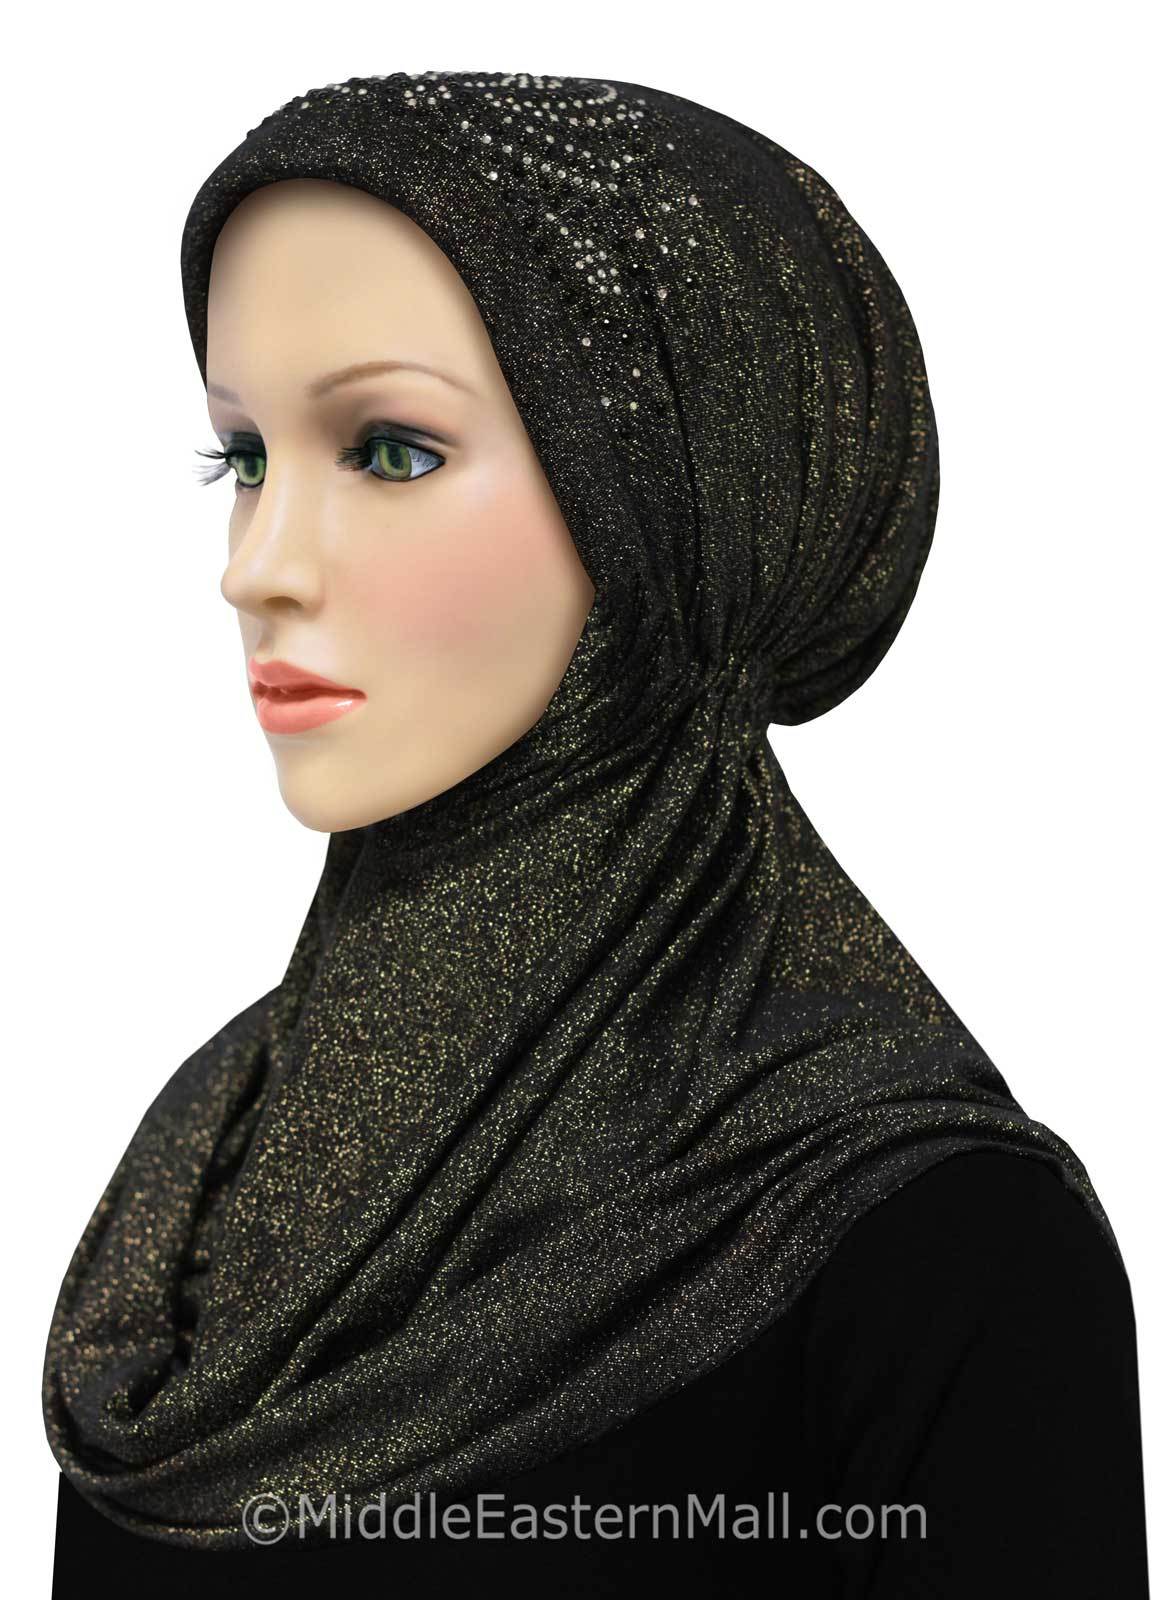 Wholesale Set of 6 Khatib Turban Easy Pull-on Hijab CLOSEOUT CLEARANCE